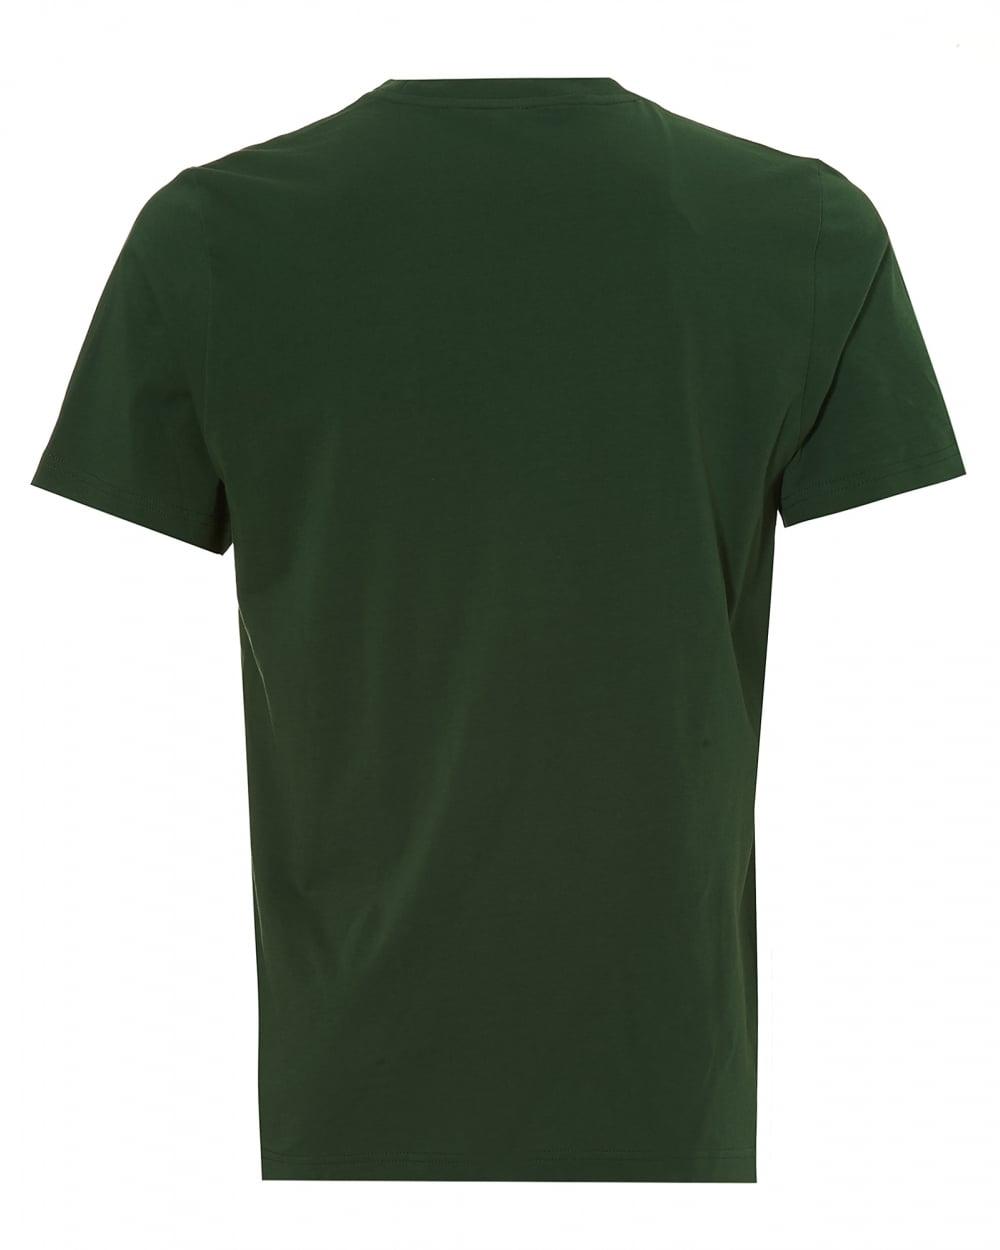 Green Y Logo - Y 3 Mens Classic Logo T Shirt, Short Sleeved Field Green Tee